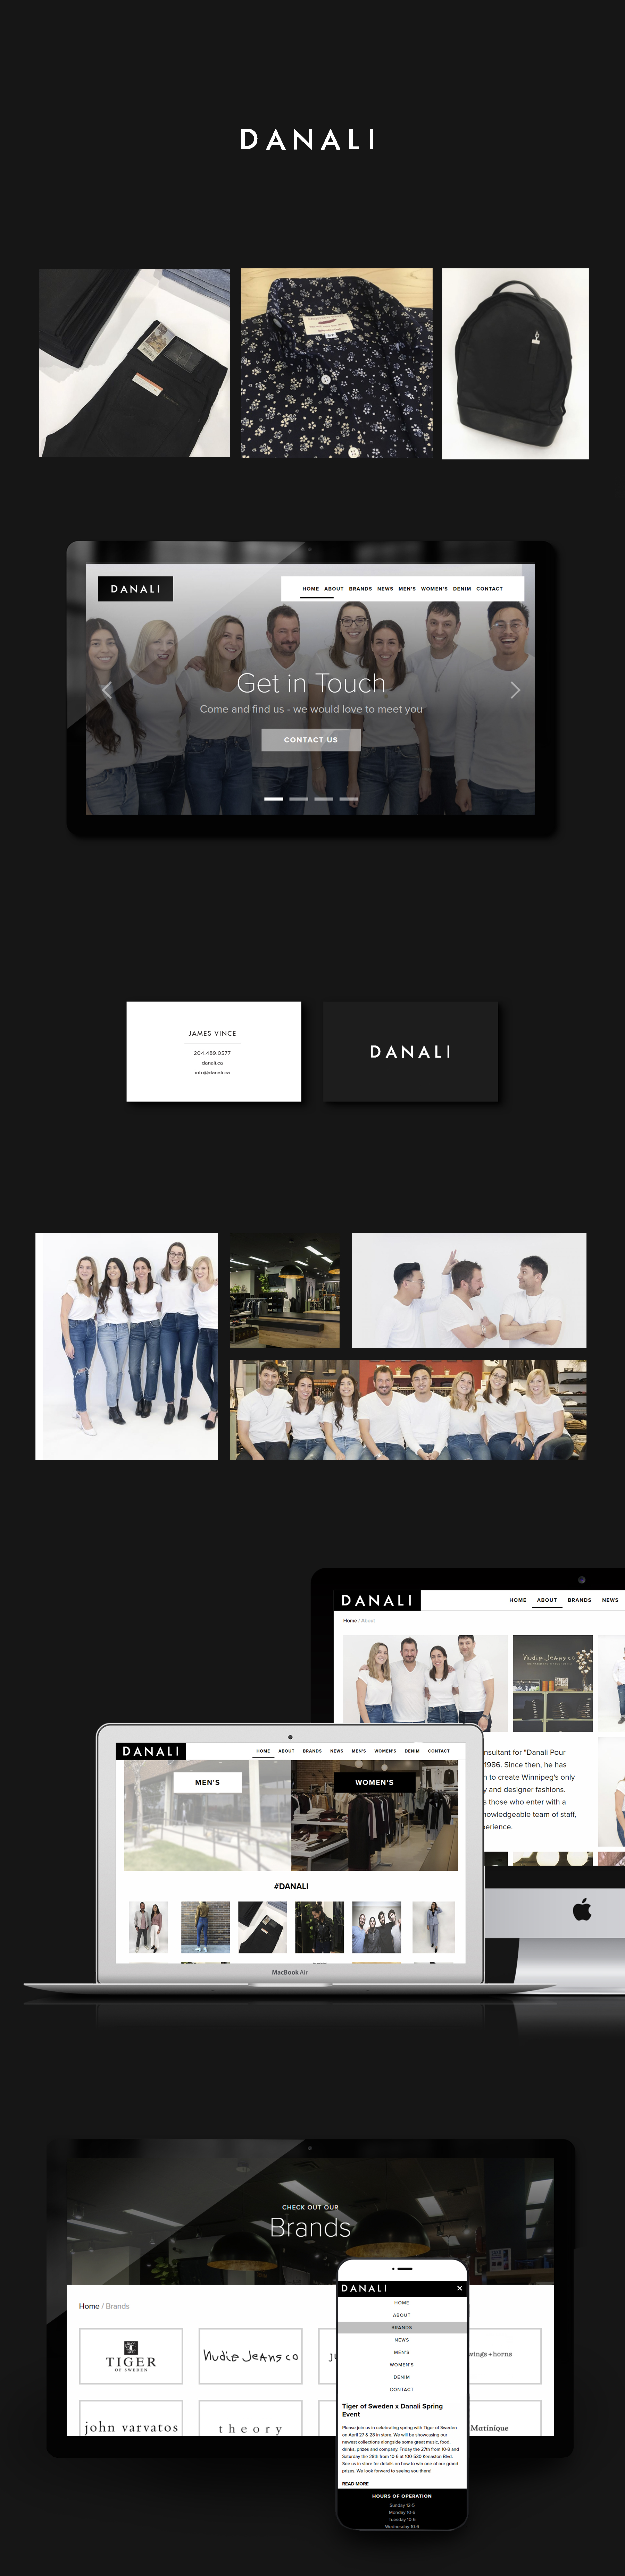 danali.ca-winnipeg-design-web-site-2018.jpg